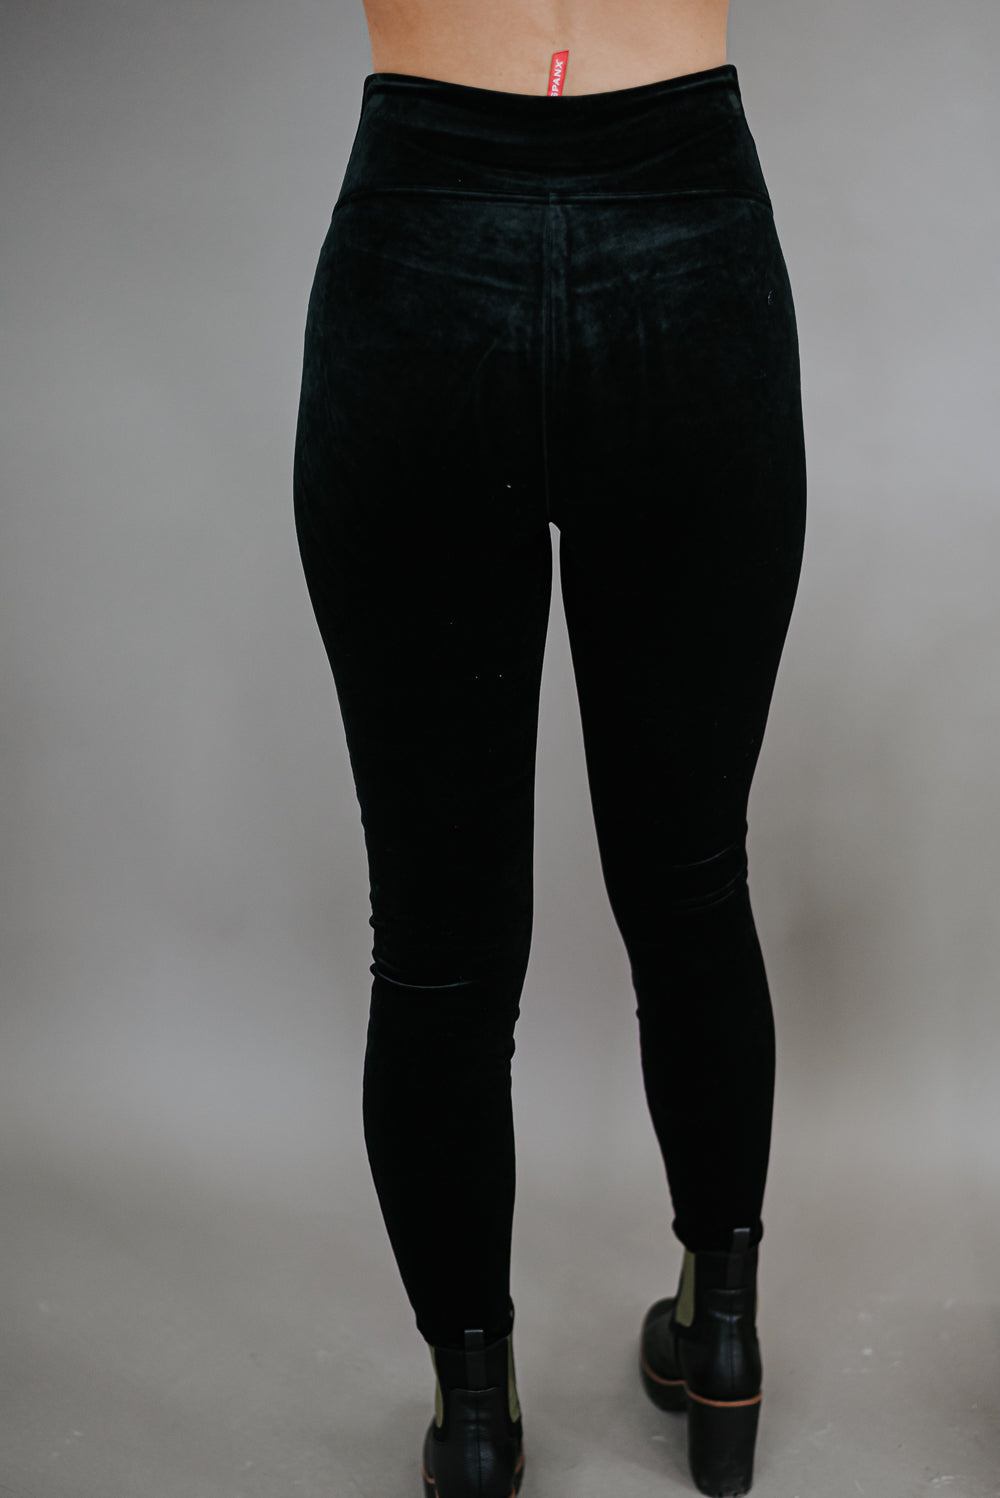 Spanx Ready to Wow Velvet Leggings Size M - $63 - From Emily